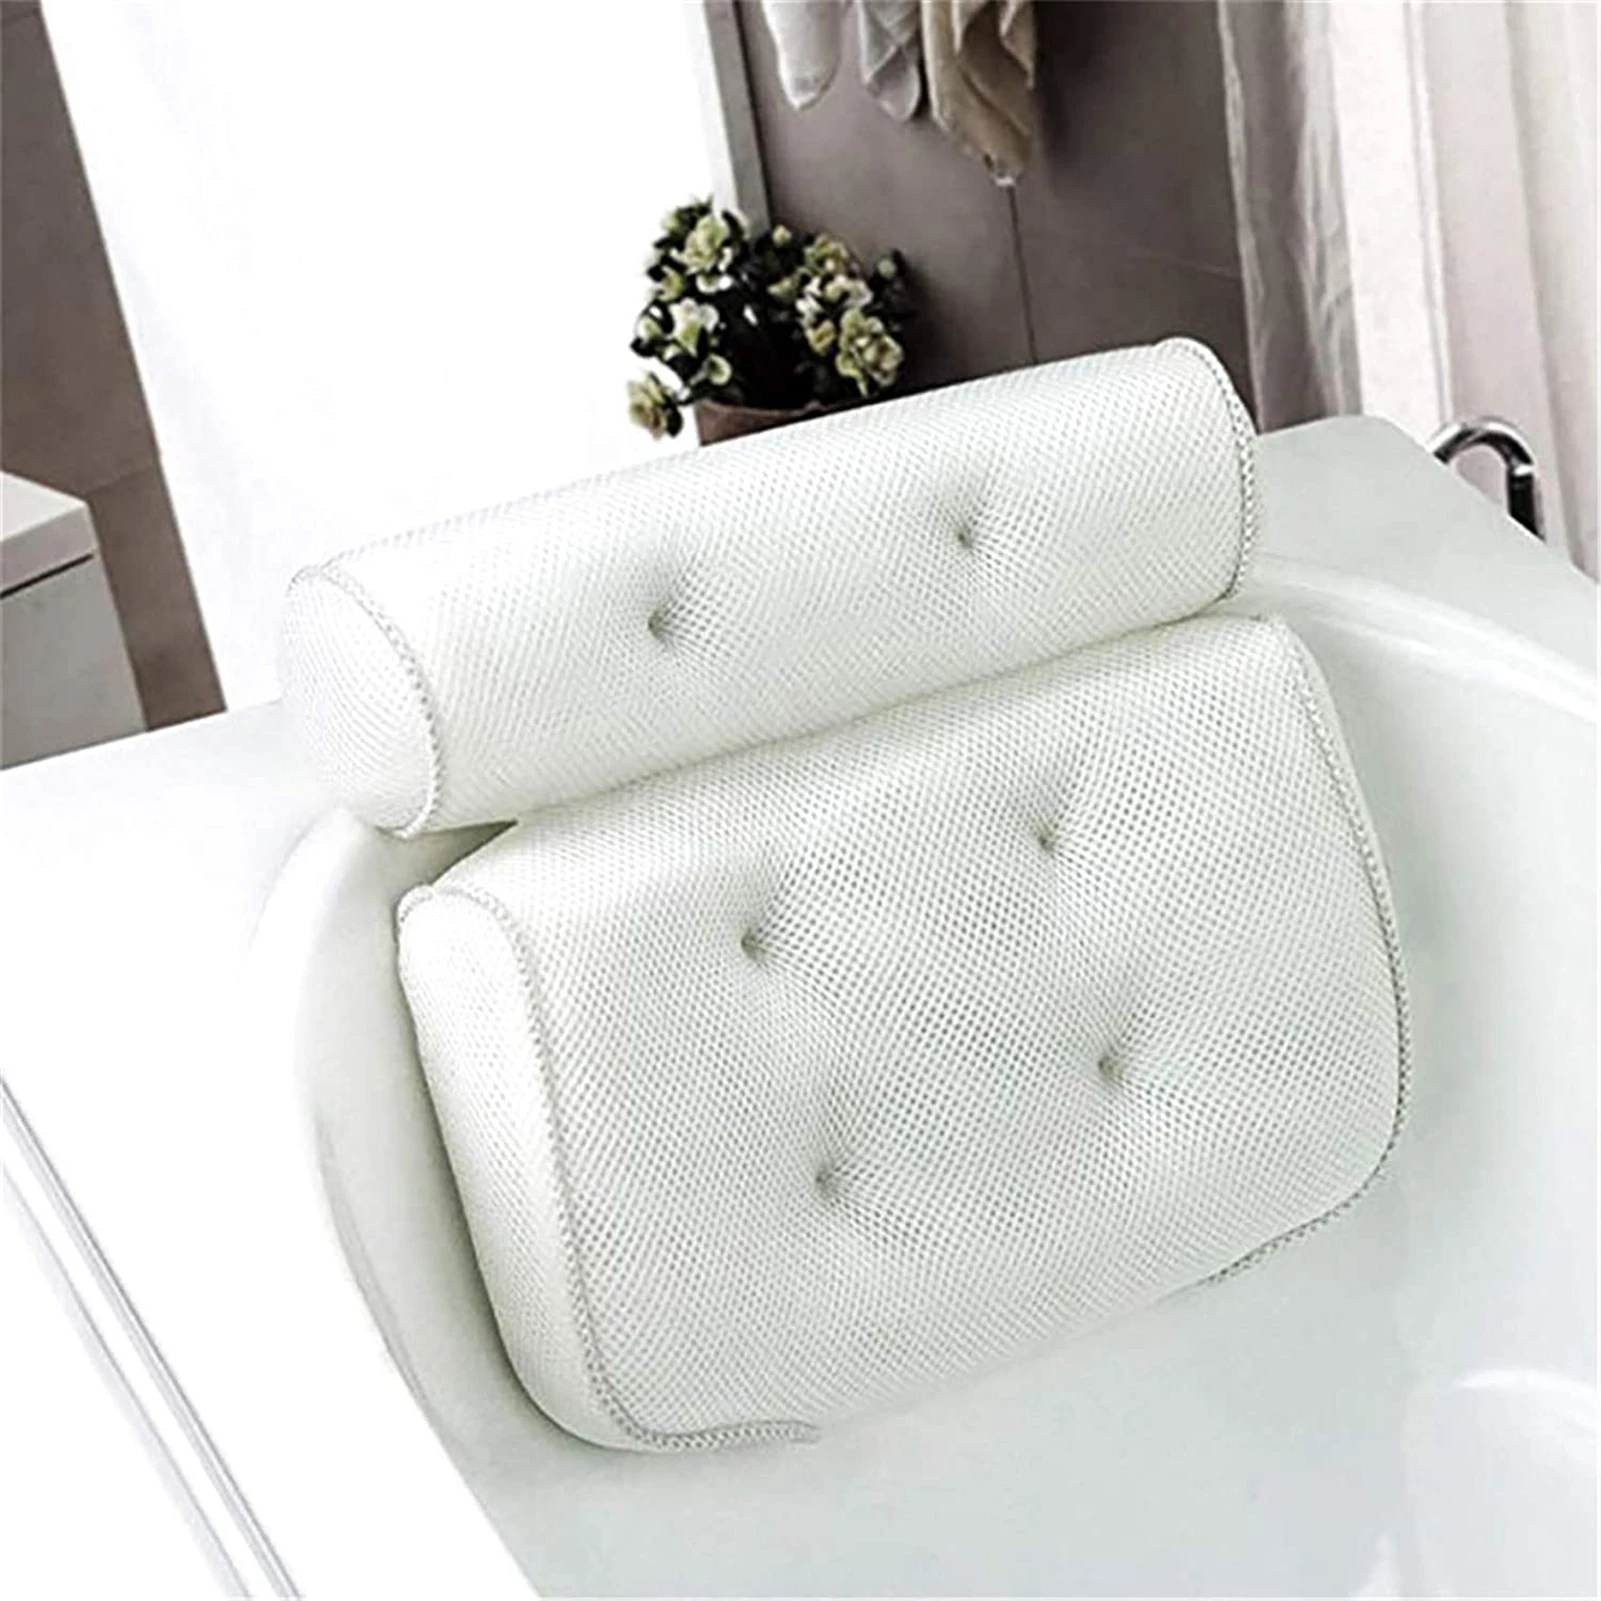 

Luxury Bath Pillow Ergonomic Bathtub Spa Pillow with 3D Air Mesh Technology and 6 Suction Cups for Bathtub Hot Tub M2